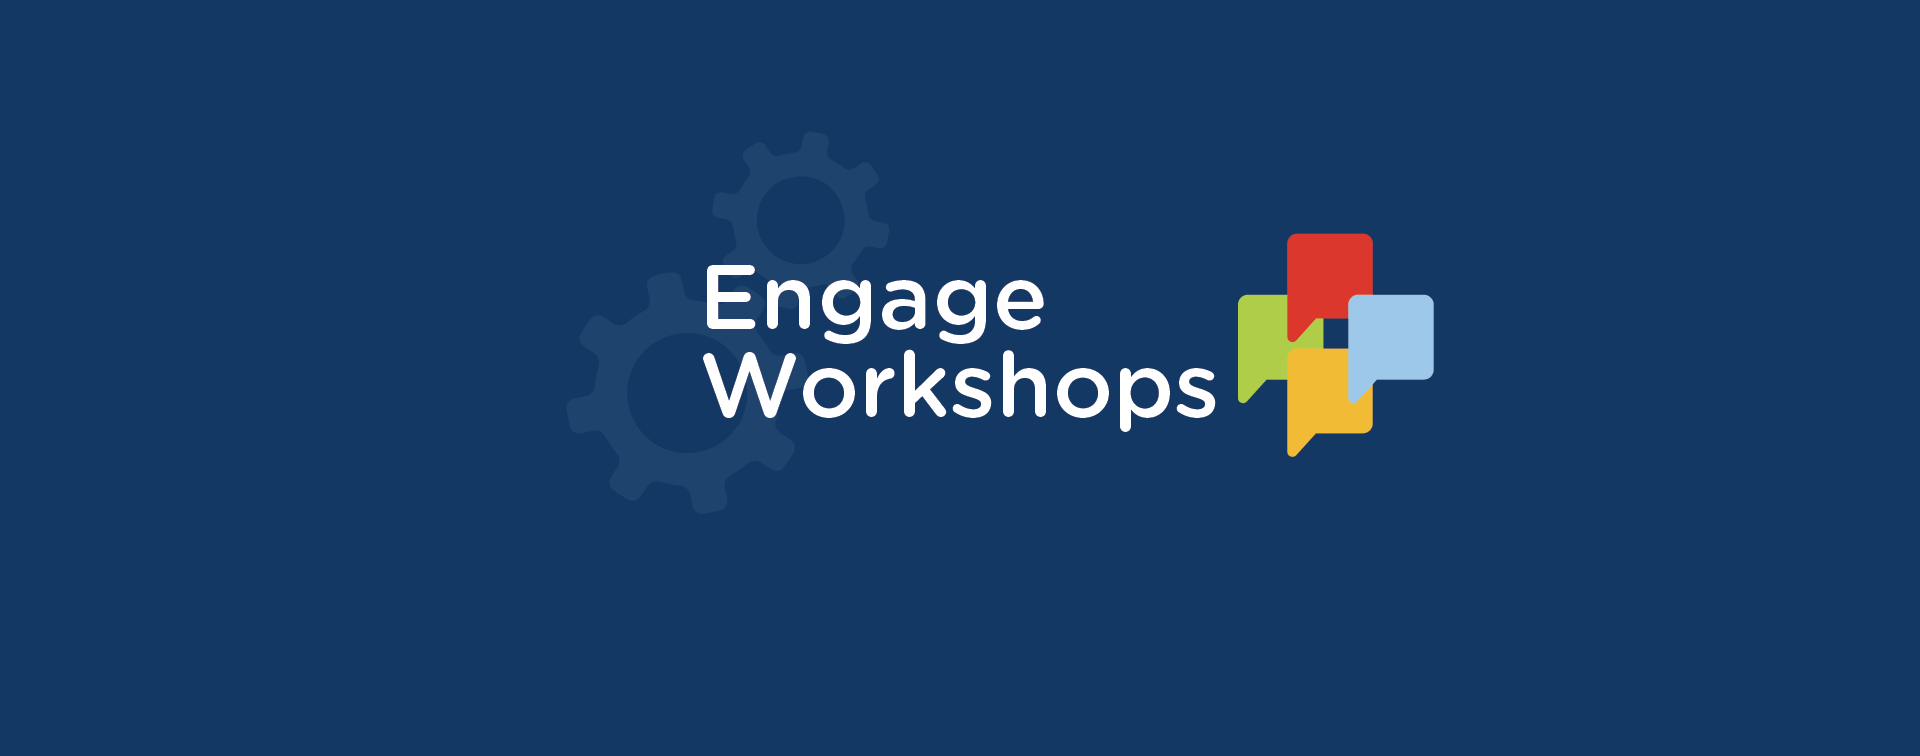 ACE Engage Workshops branding